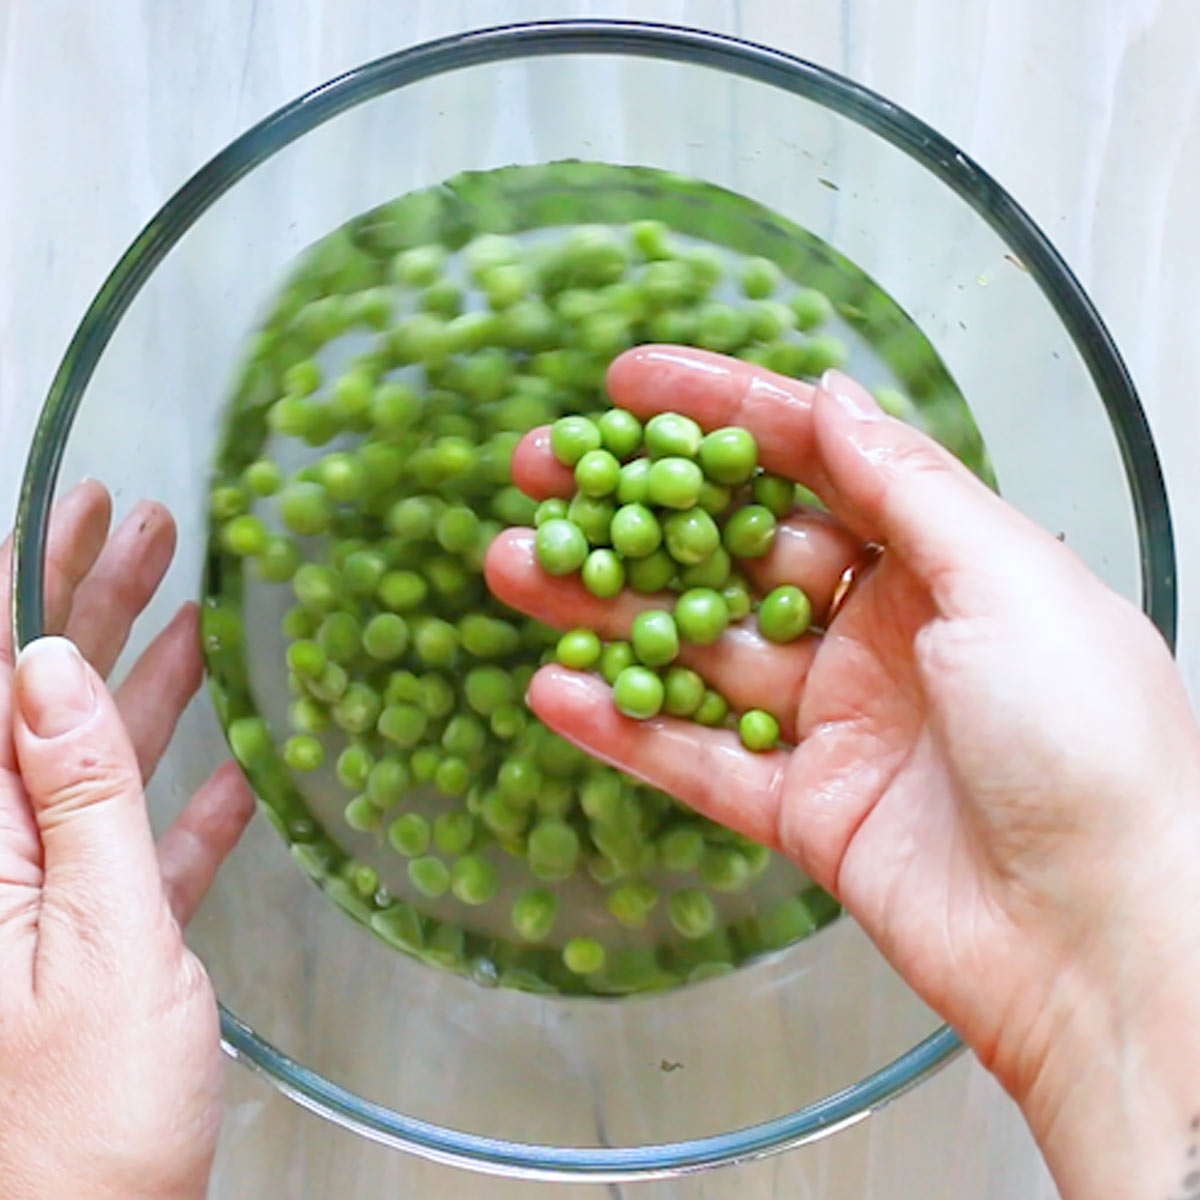 rinse green peas in water and vinegar